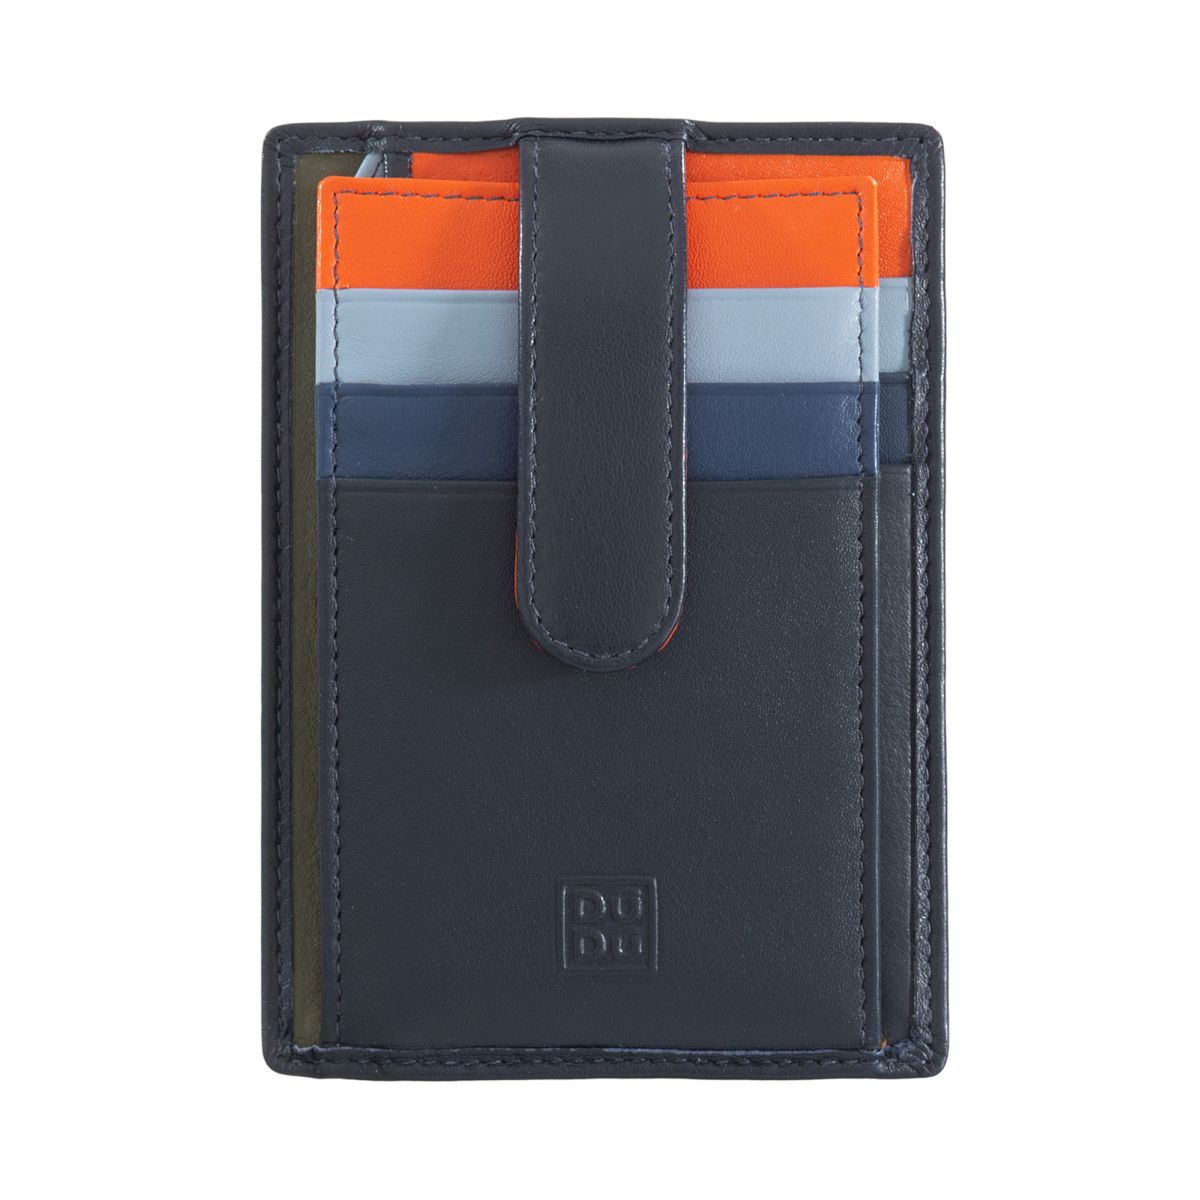 DuDu Compact multi color credit card holder wallet - Navy